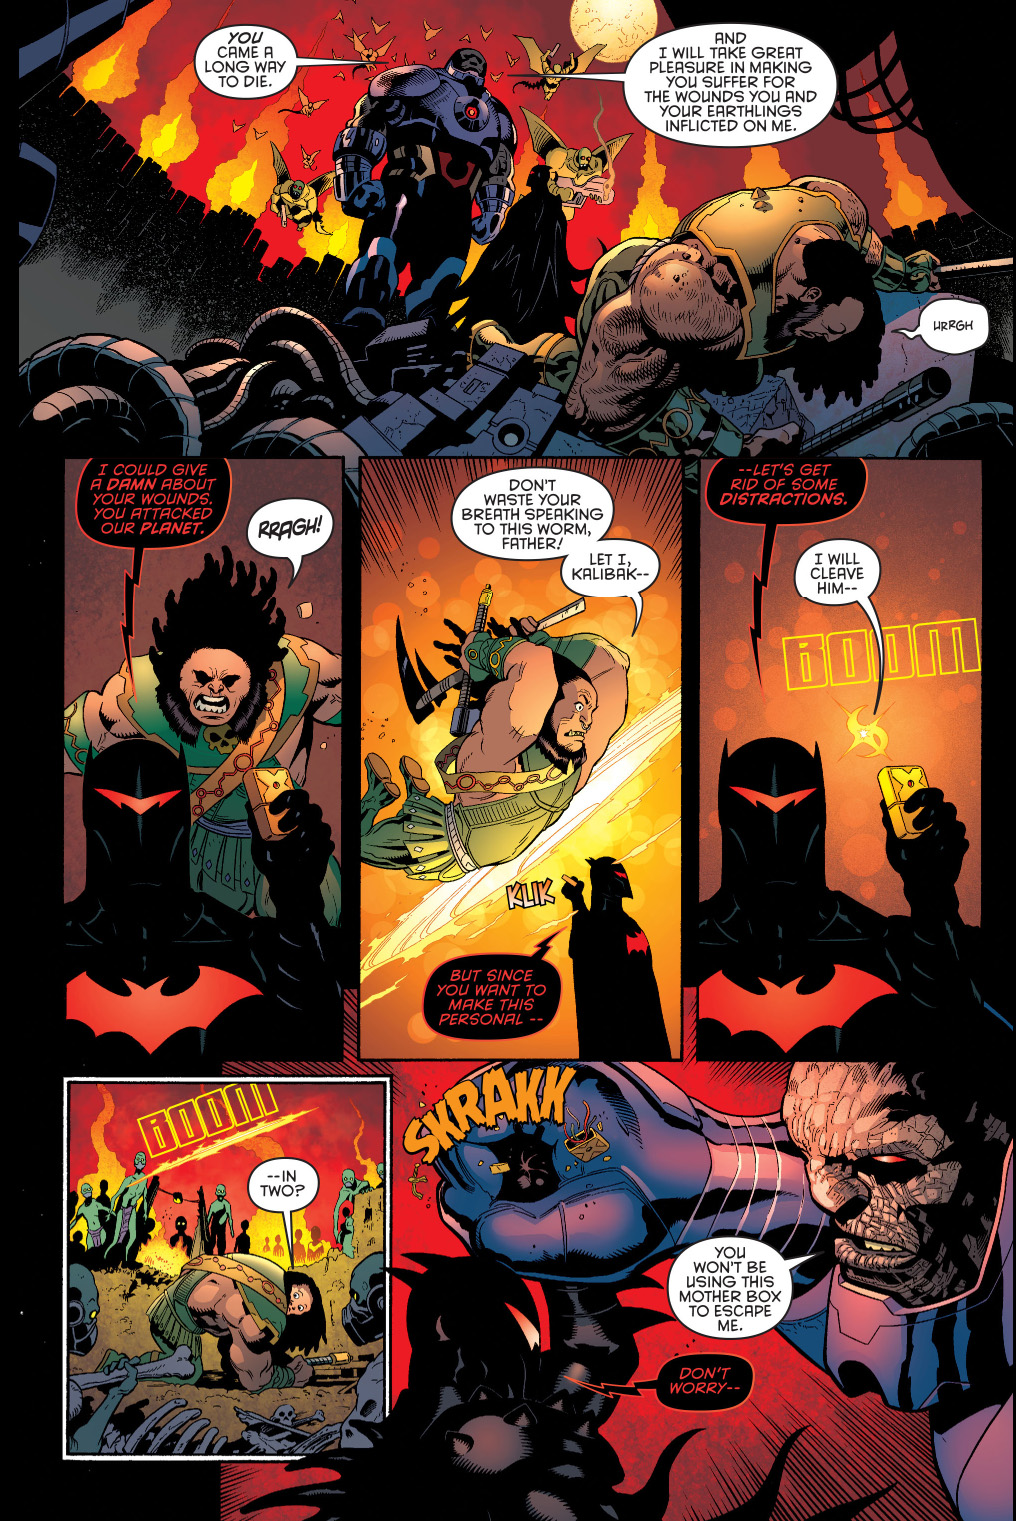 batman in hellbat armor faces off with darkseid